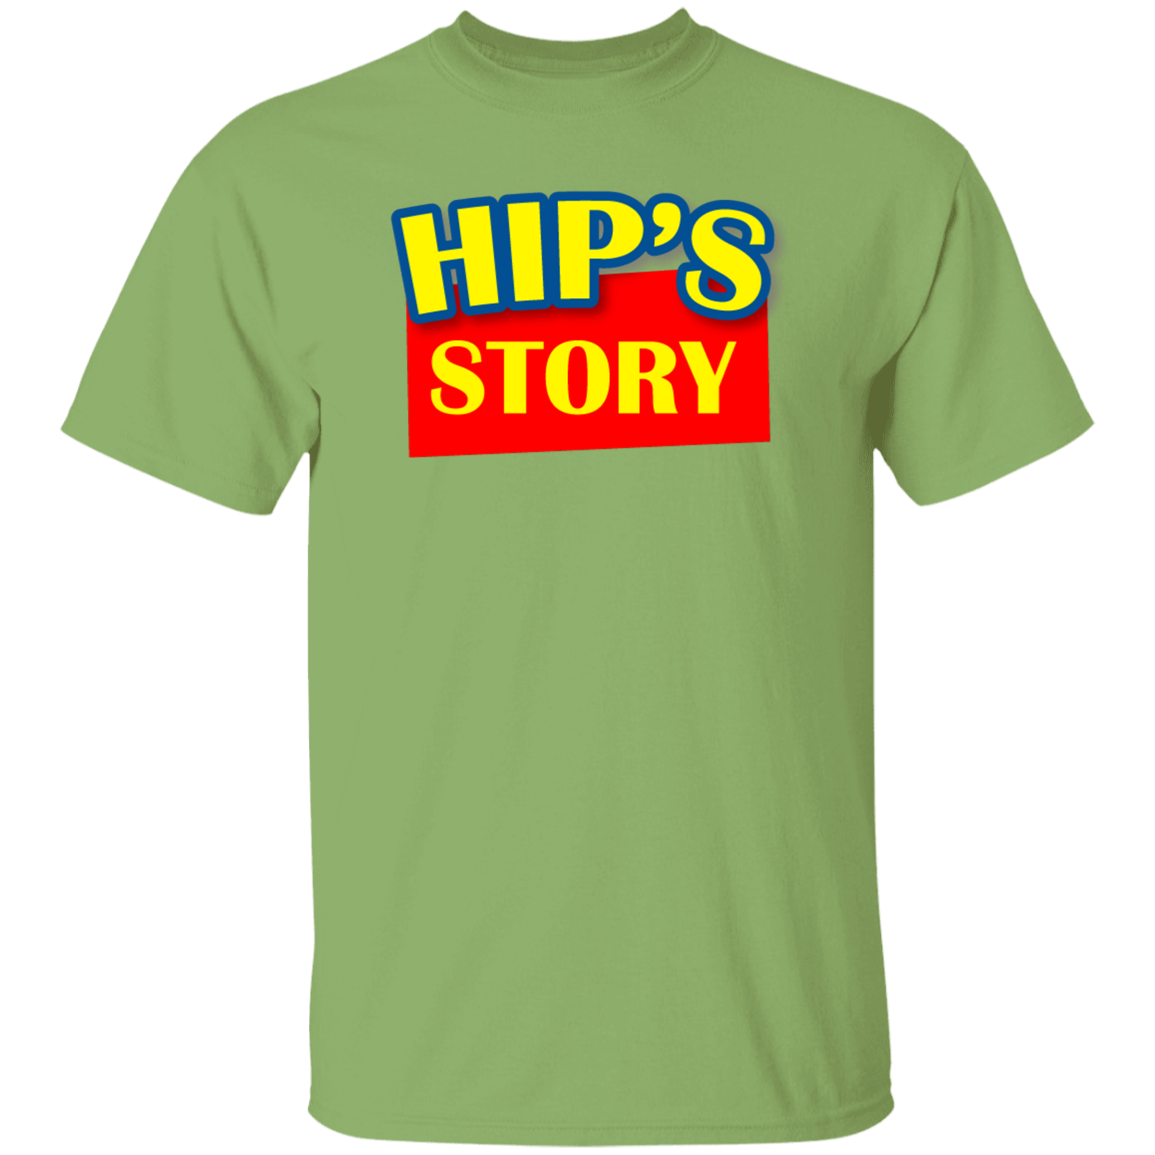 Hip Story -  T-Shirt